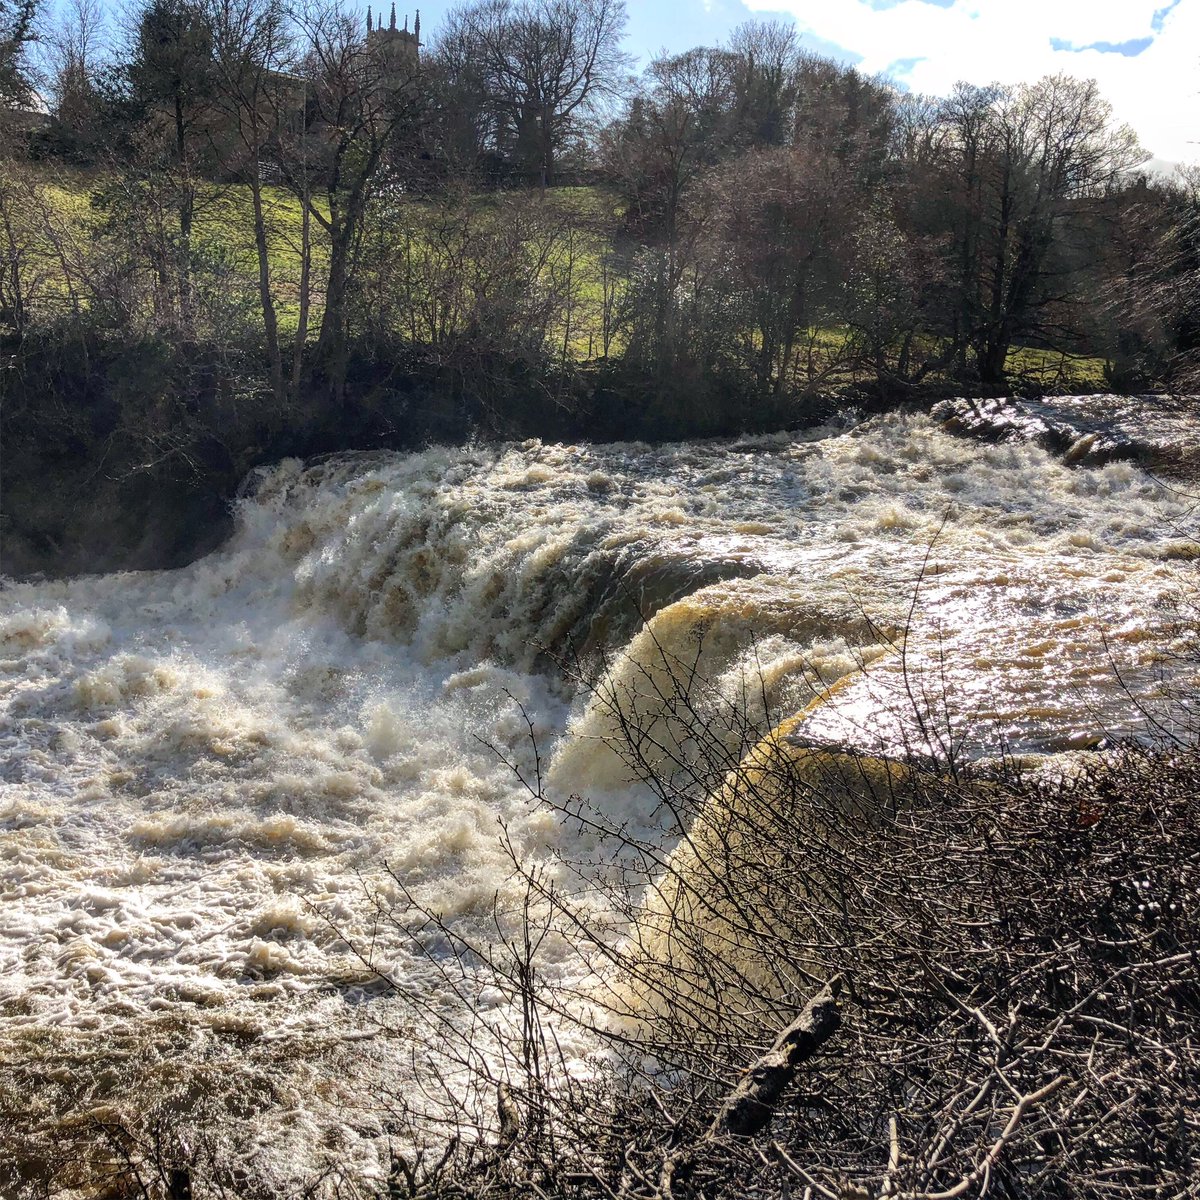 Plenty water in the rivers at Aysgarth Falls 💦 #Aysgarth #AysgarthFalls #Yorkshire #YorkshireDales #Travel #TravelPhotography #Photography #RobinsonRoams